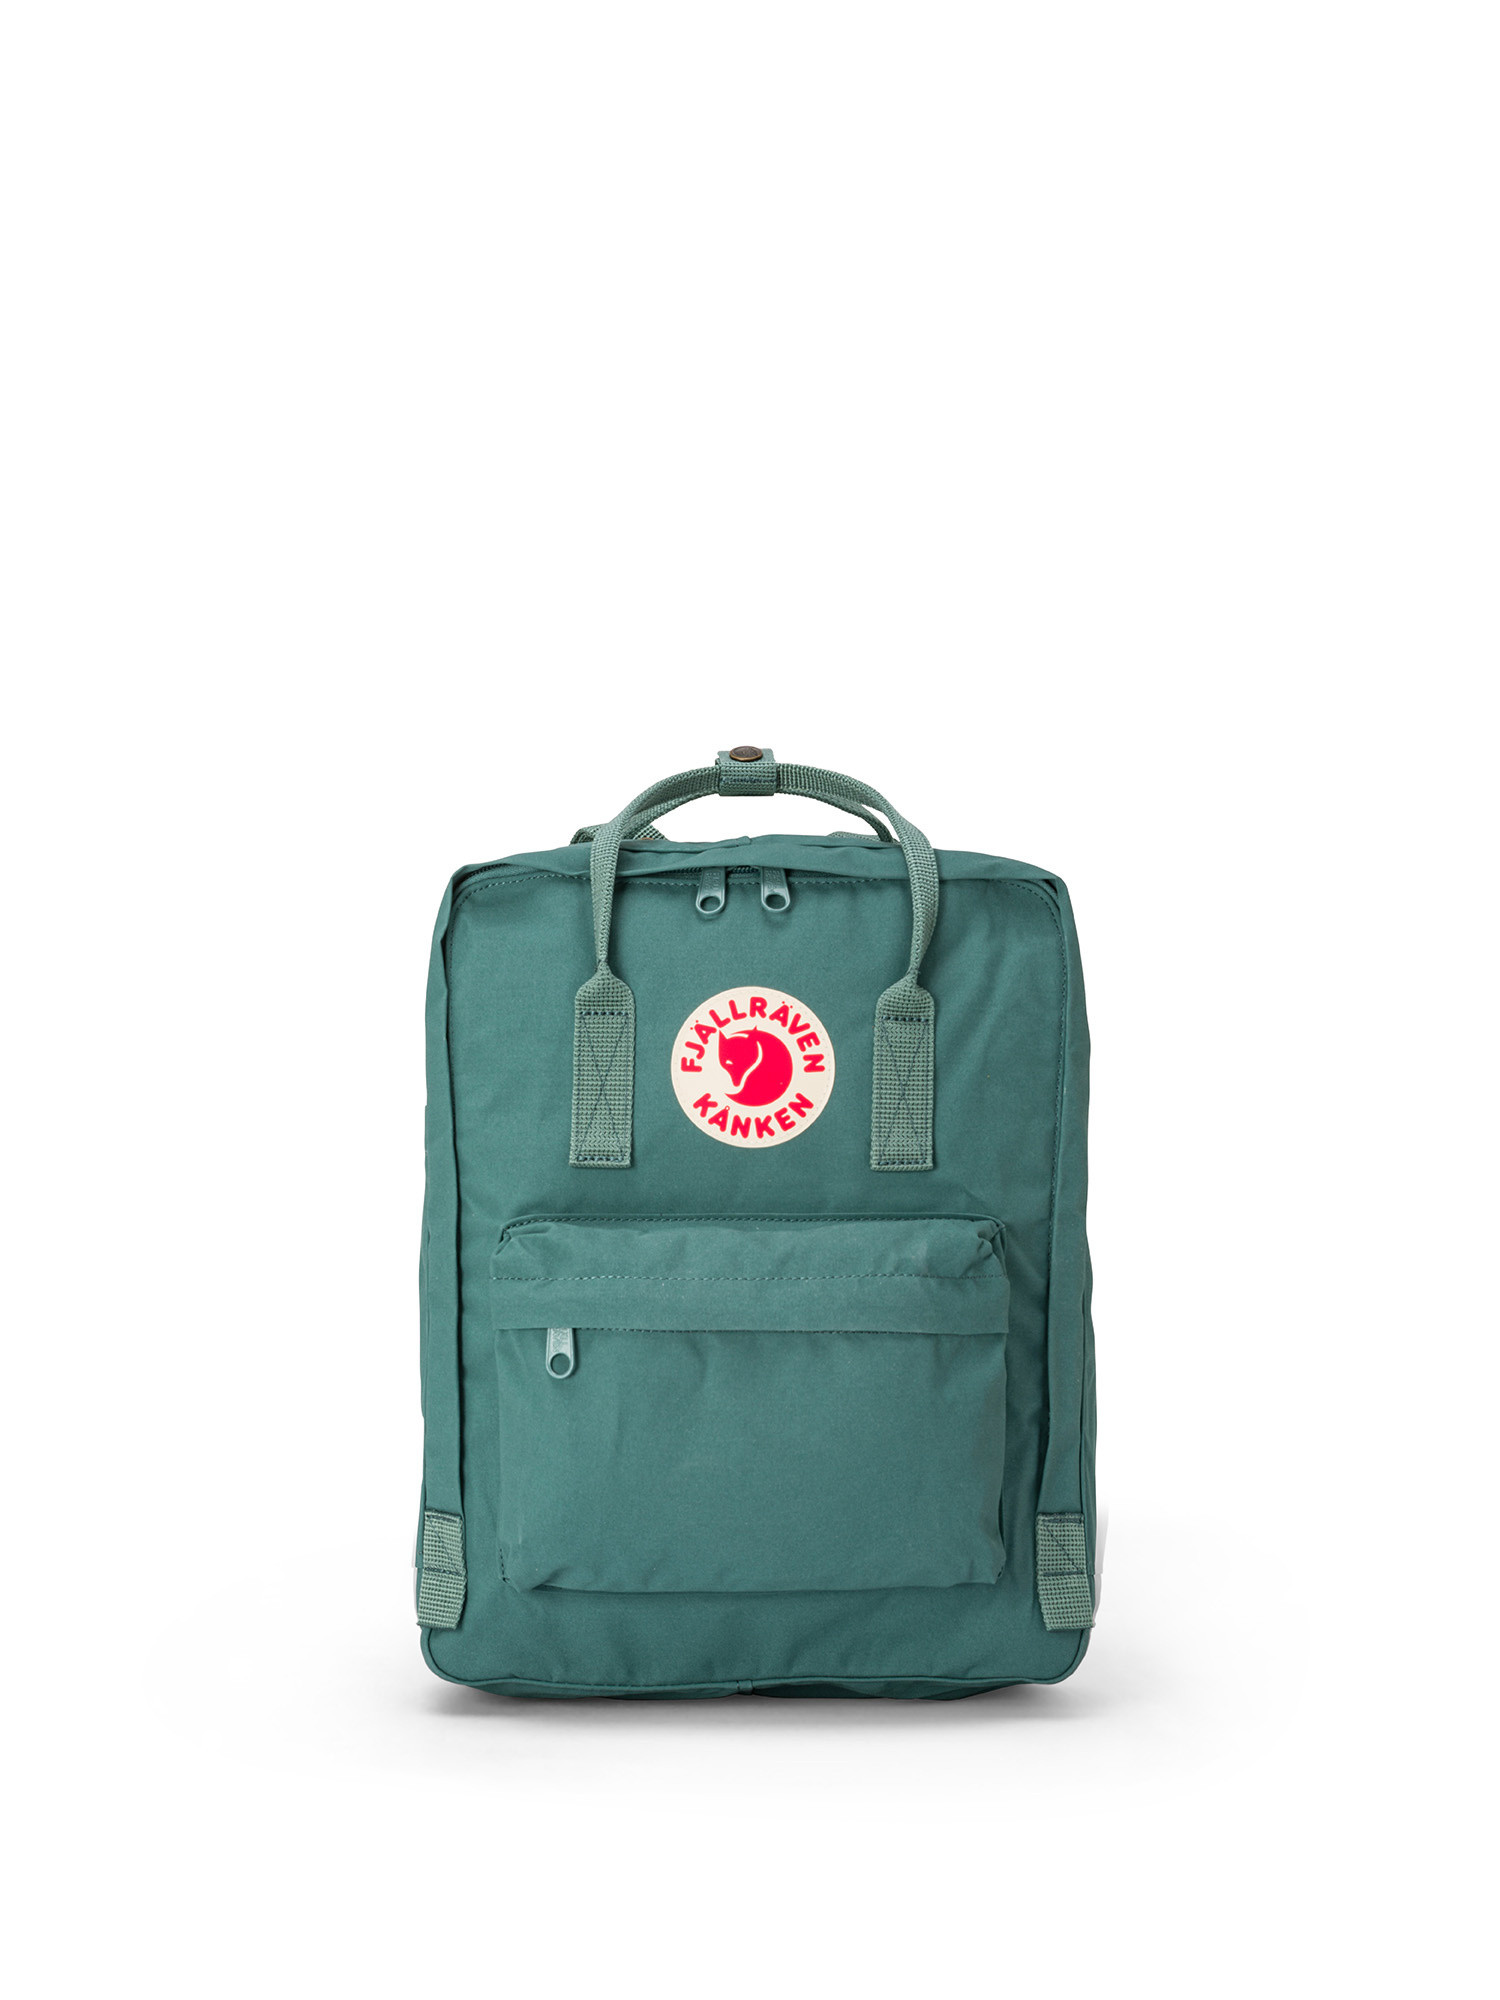 Fjallraven - Classic Kånken backpack in durable Vinylon fabric, Teal, large image number 0